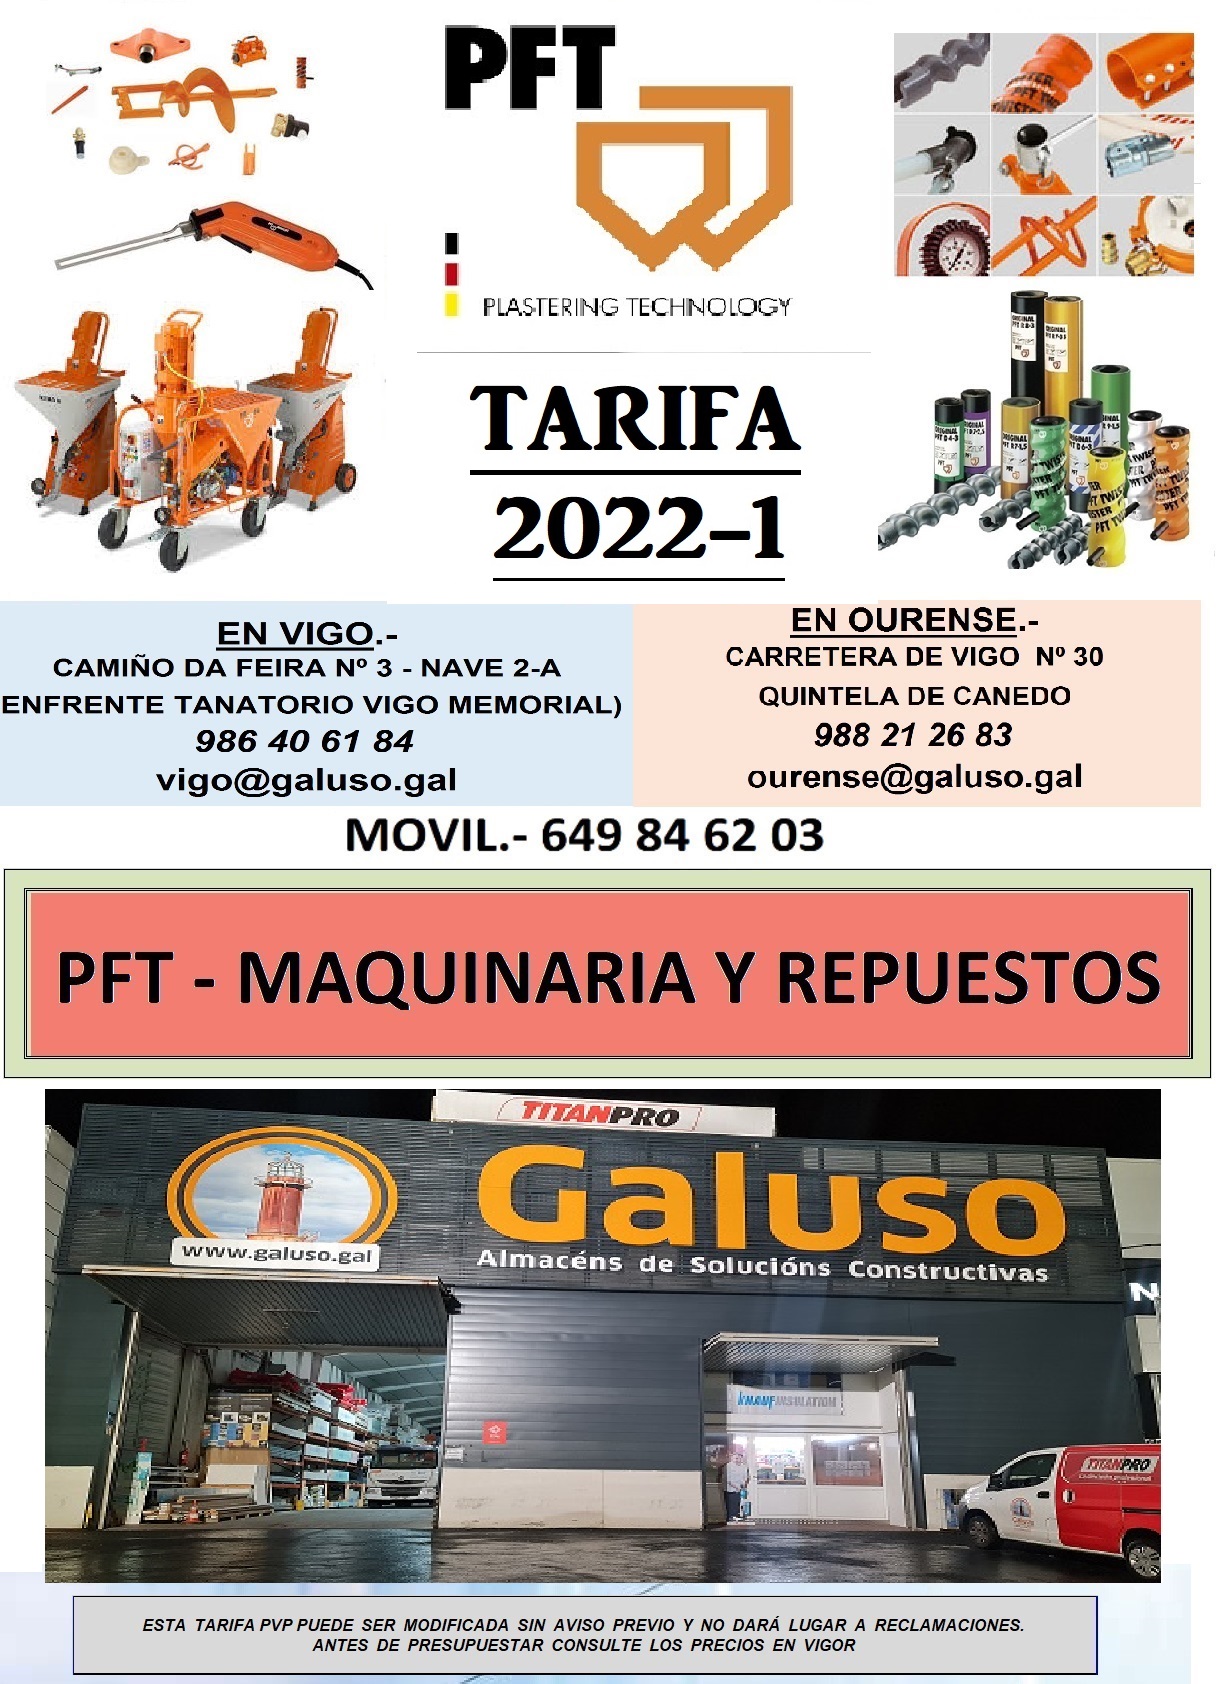 TARIFA PFT 2022-1